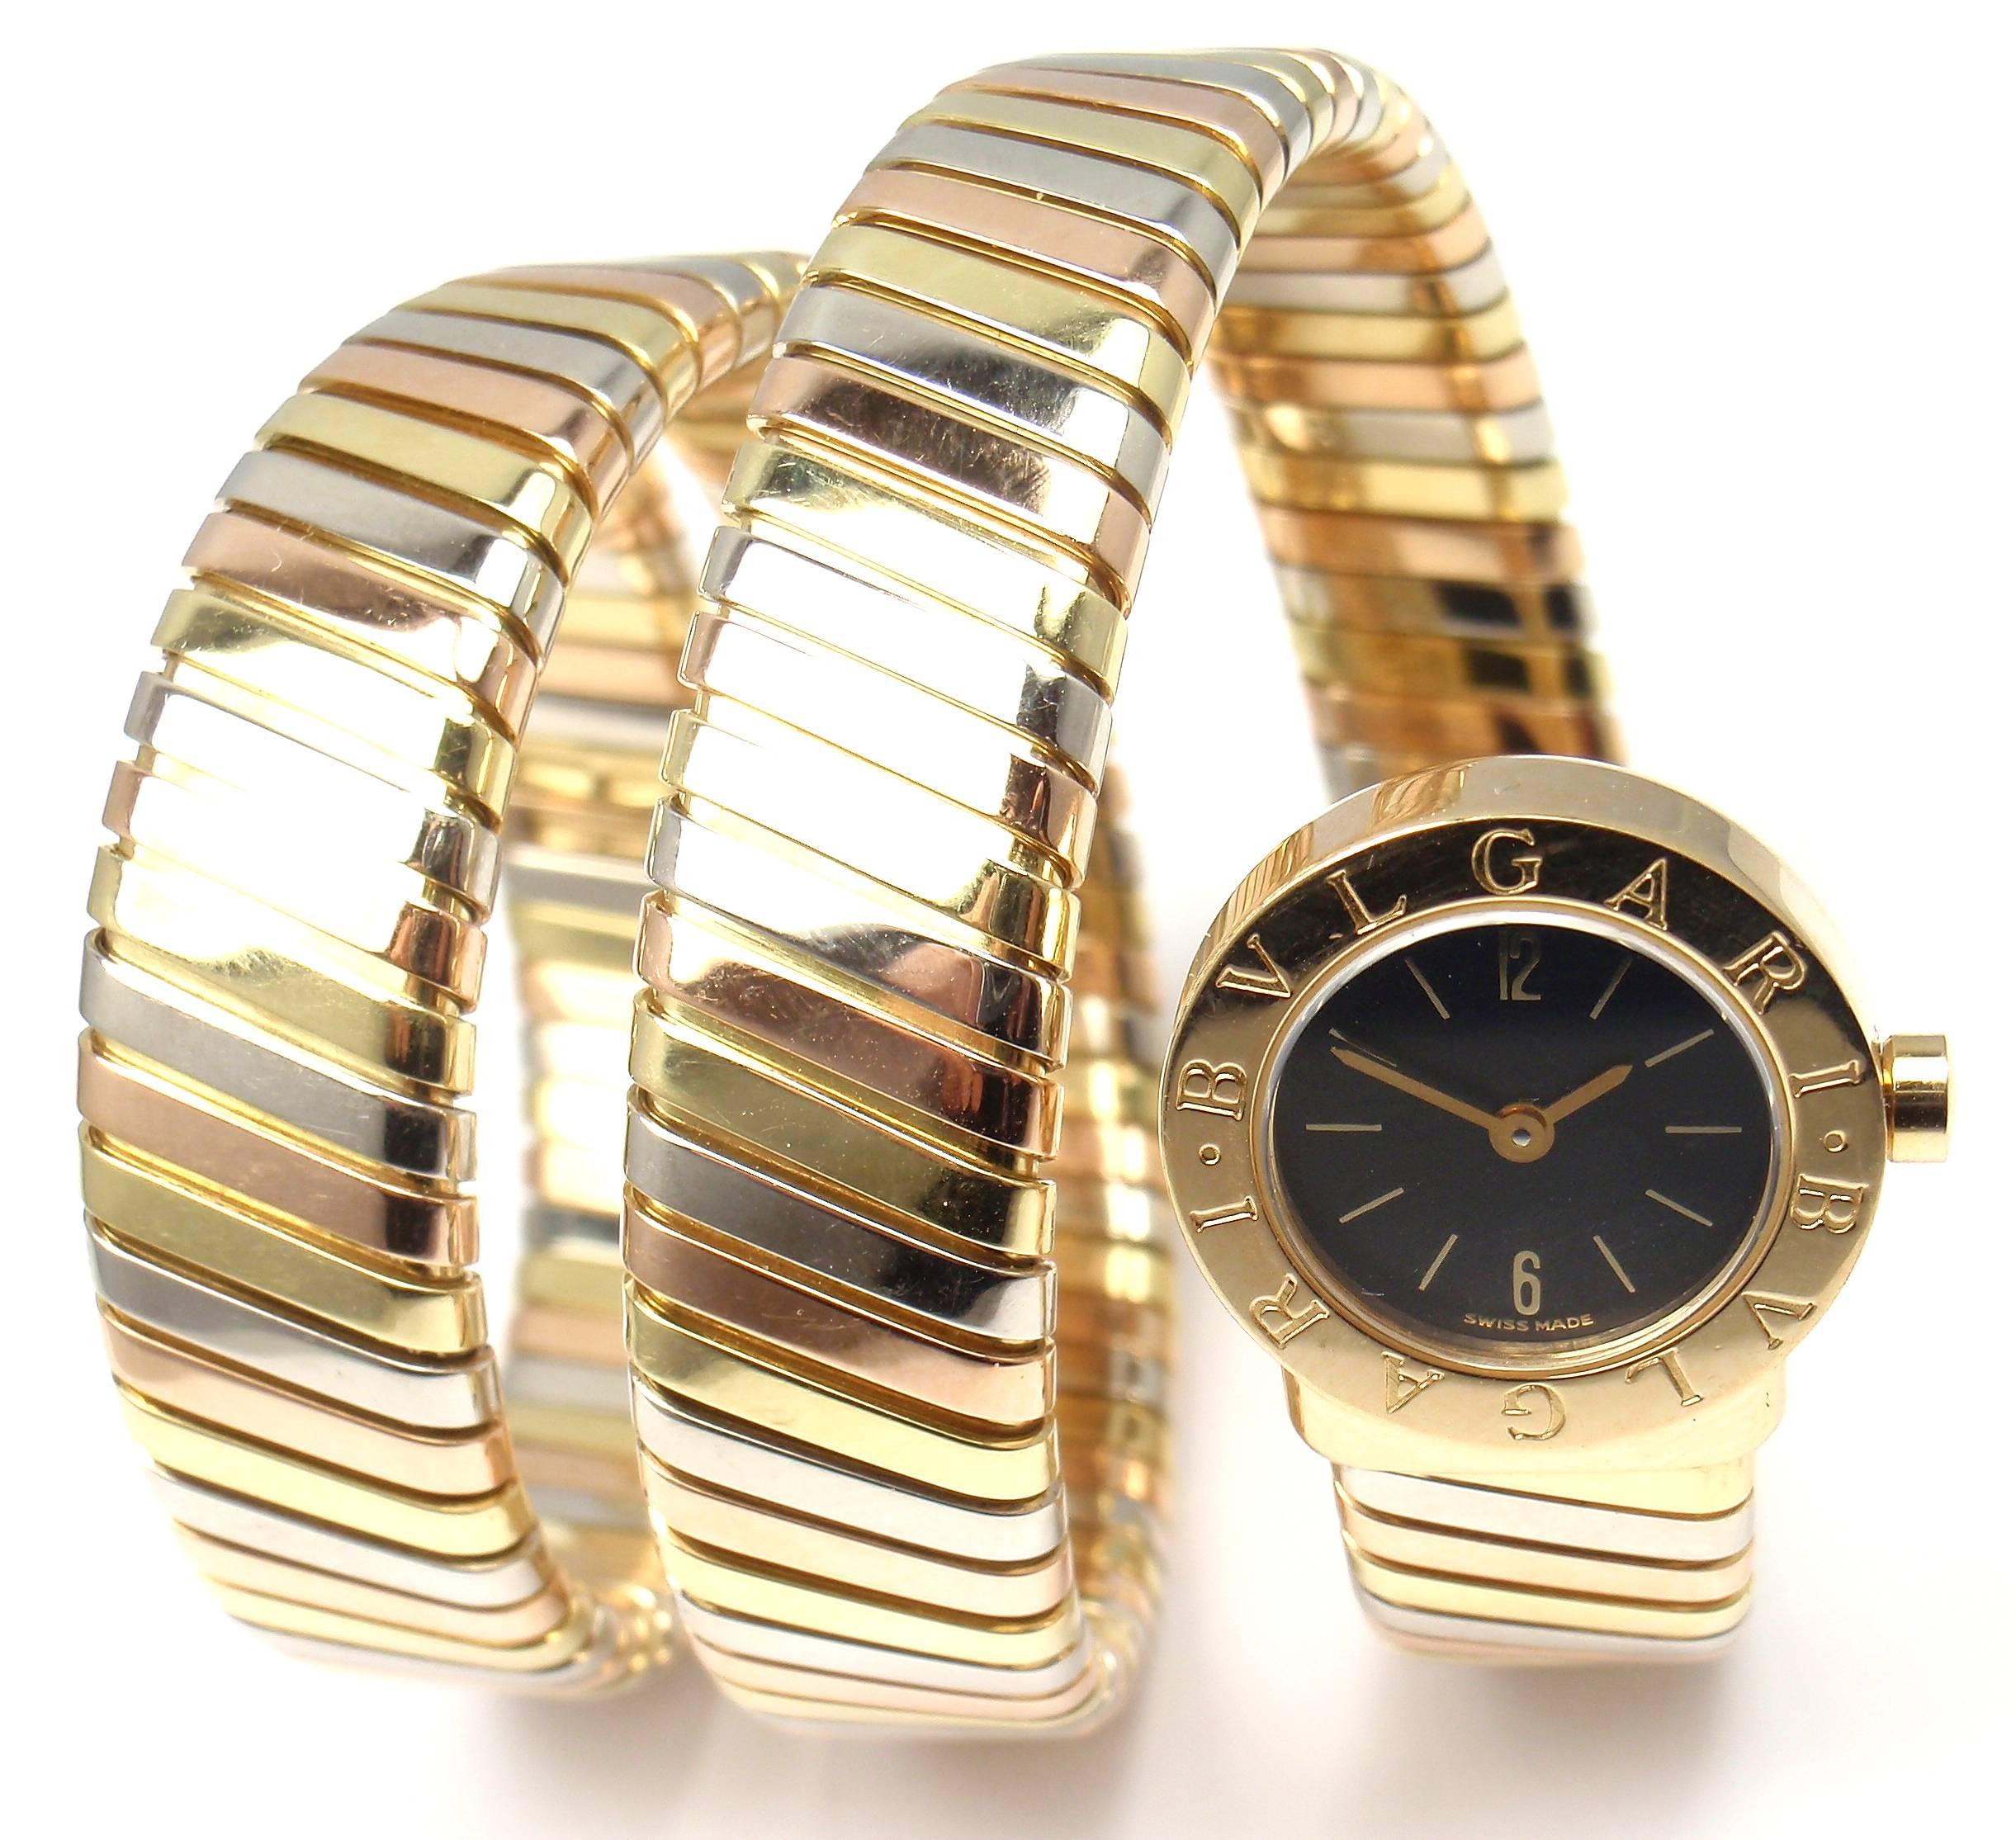 Bulgari lady's 18k tri-color gold (yellow, white, rose) Tubogas serpent bracelet watch. 
This watch comes with an original Bulgari box.

Details:
Movement Type: Quartz
Case Size: 3/4